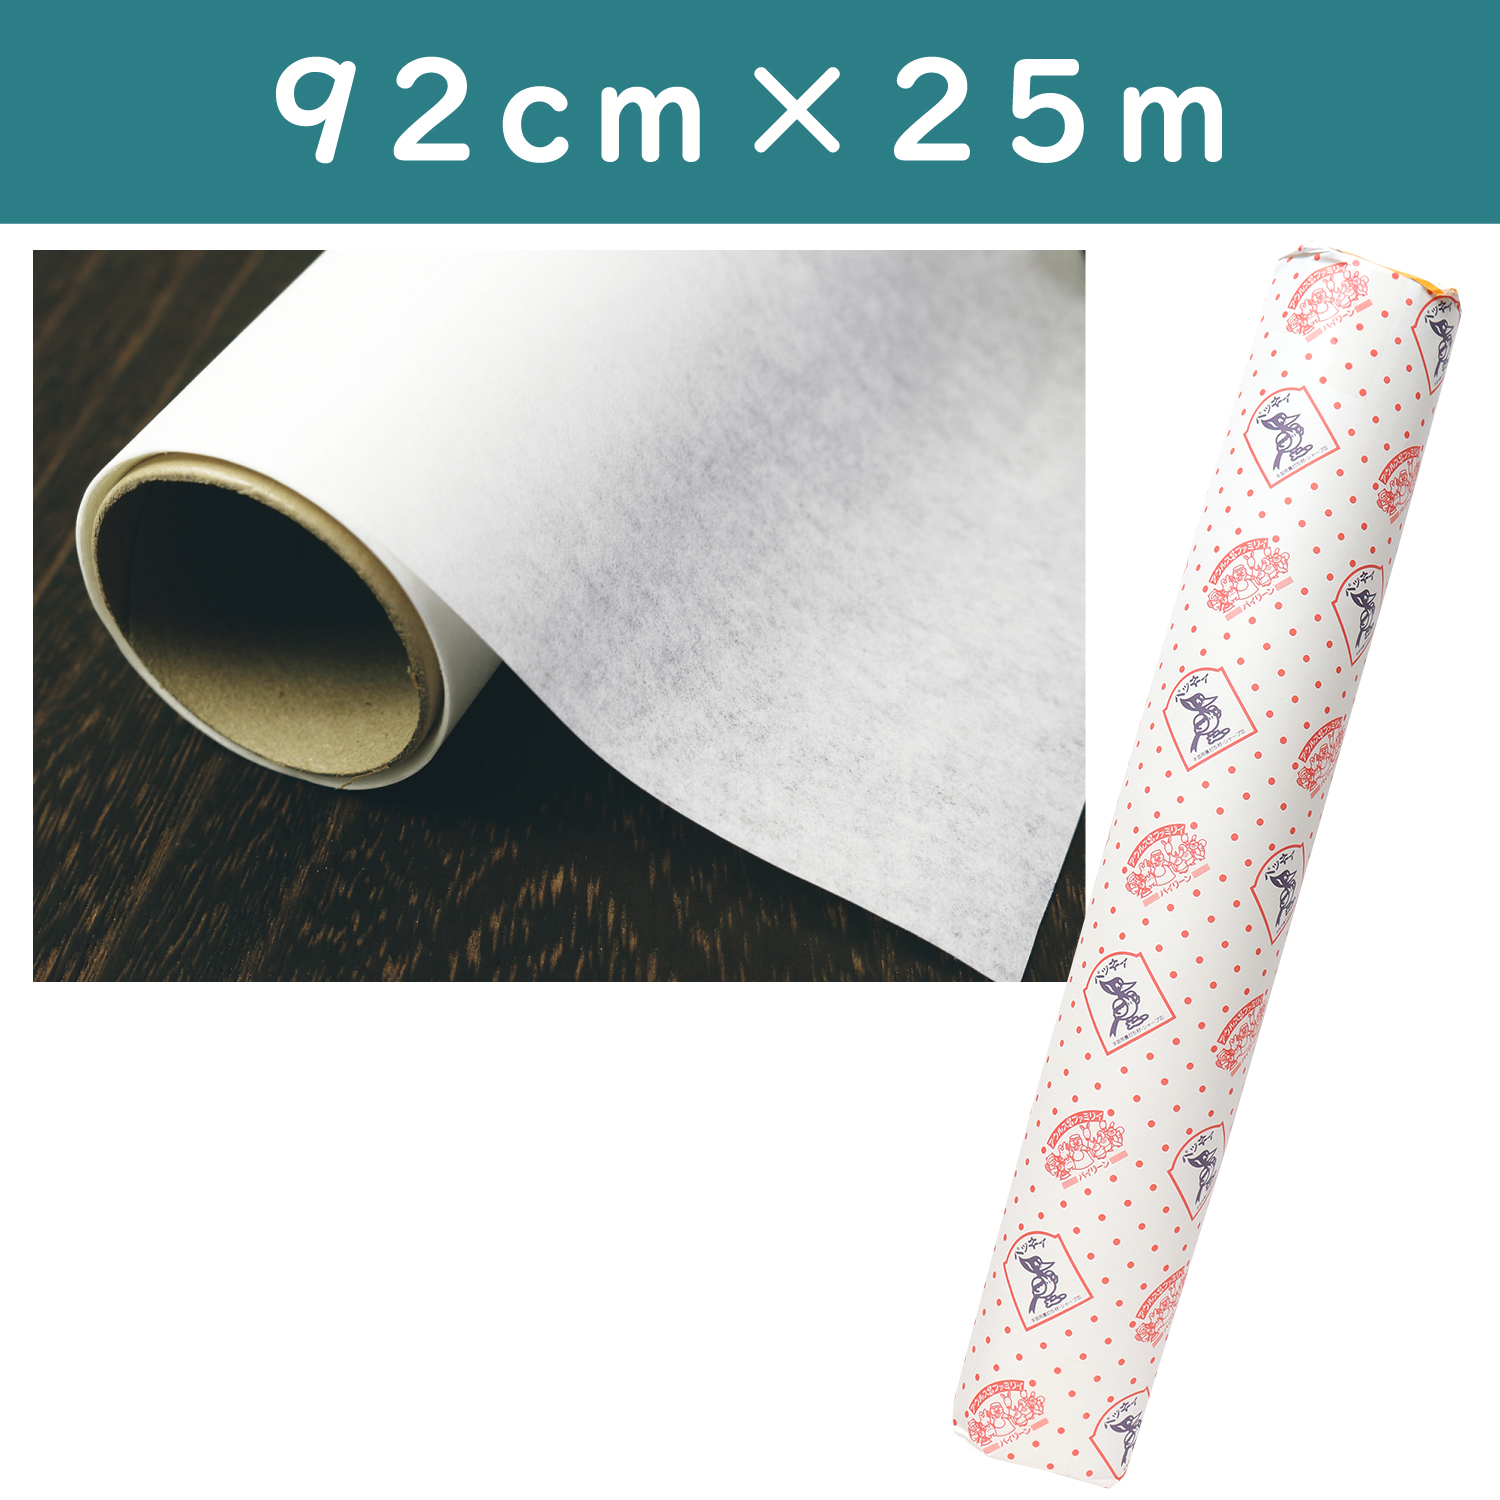 JF104 Vilene MF sheet, adhesive on both sides, width 92cm x 25m (roll)